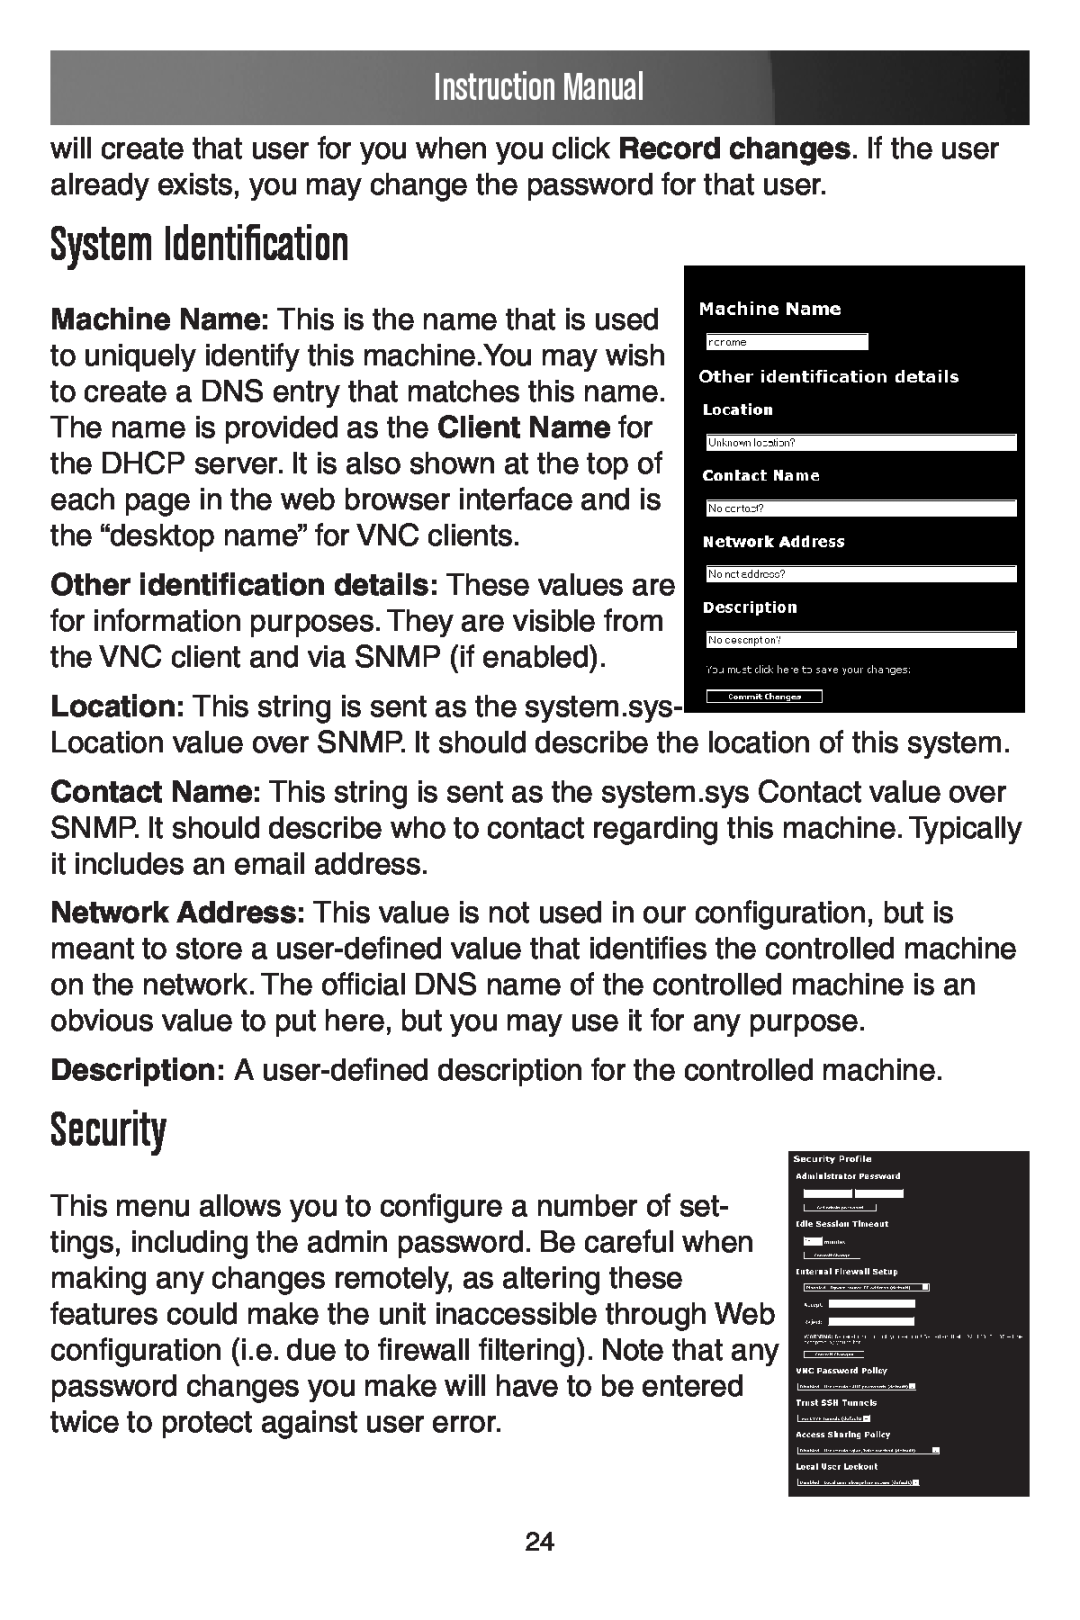 StarTech.com SV441DUSBI instruction manual System Identification, Security, Instruction Manual 